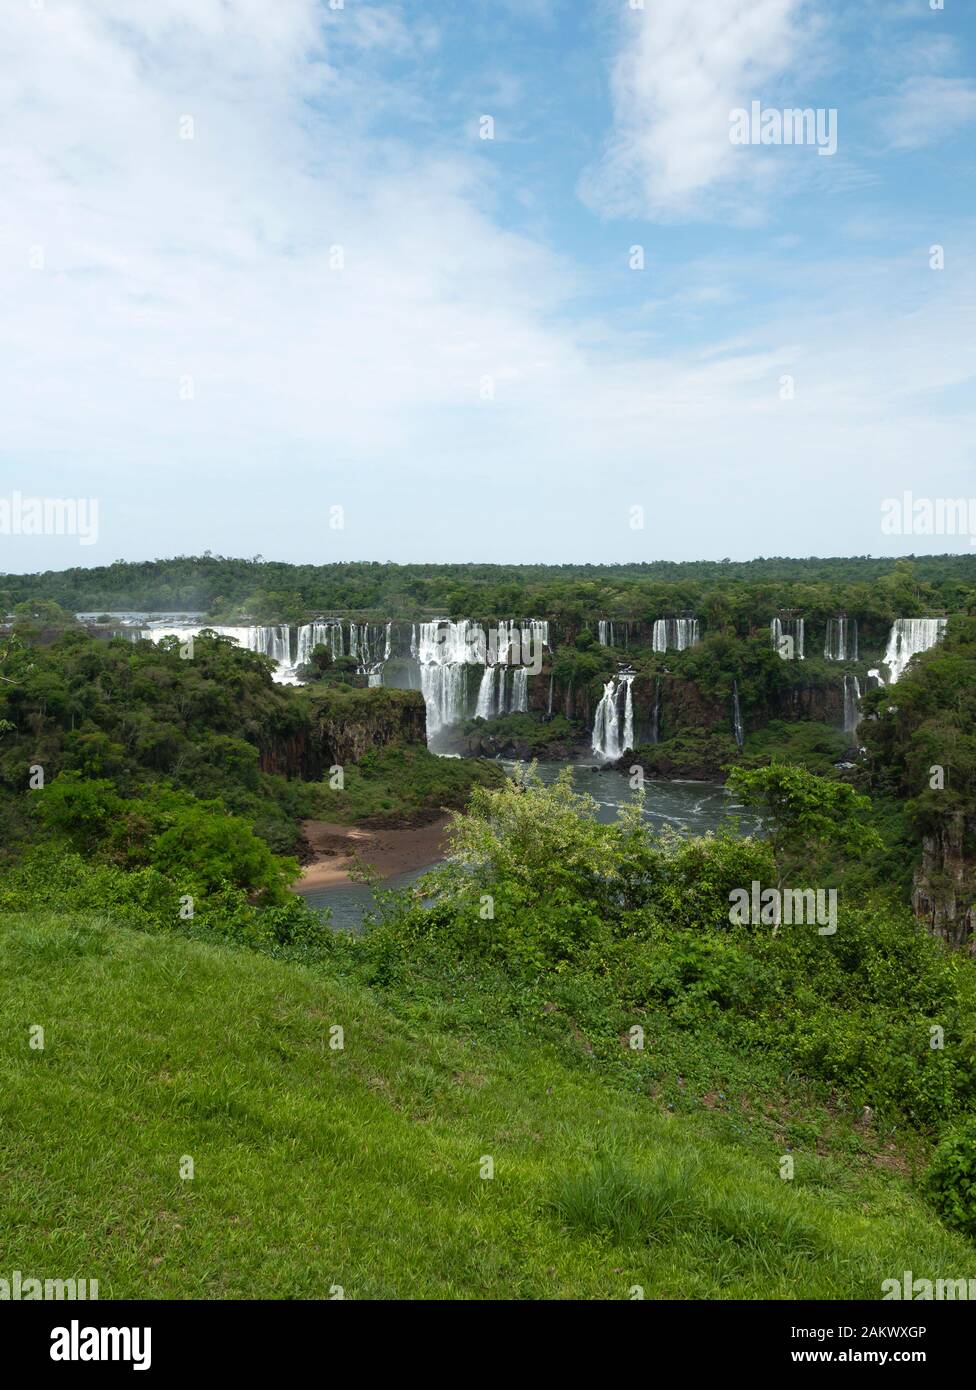 Vista verso le Cascate di Iguassù (cascate Iguacu) in Argentina come visto dal lato Brasiliano delle Cascate. Cascate Iguacu, il Parco Nazionale del Brasile. Foto Stock